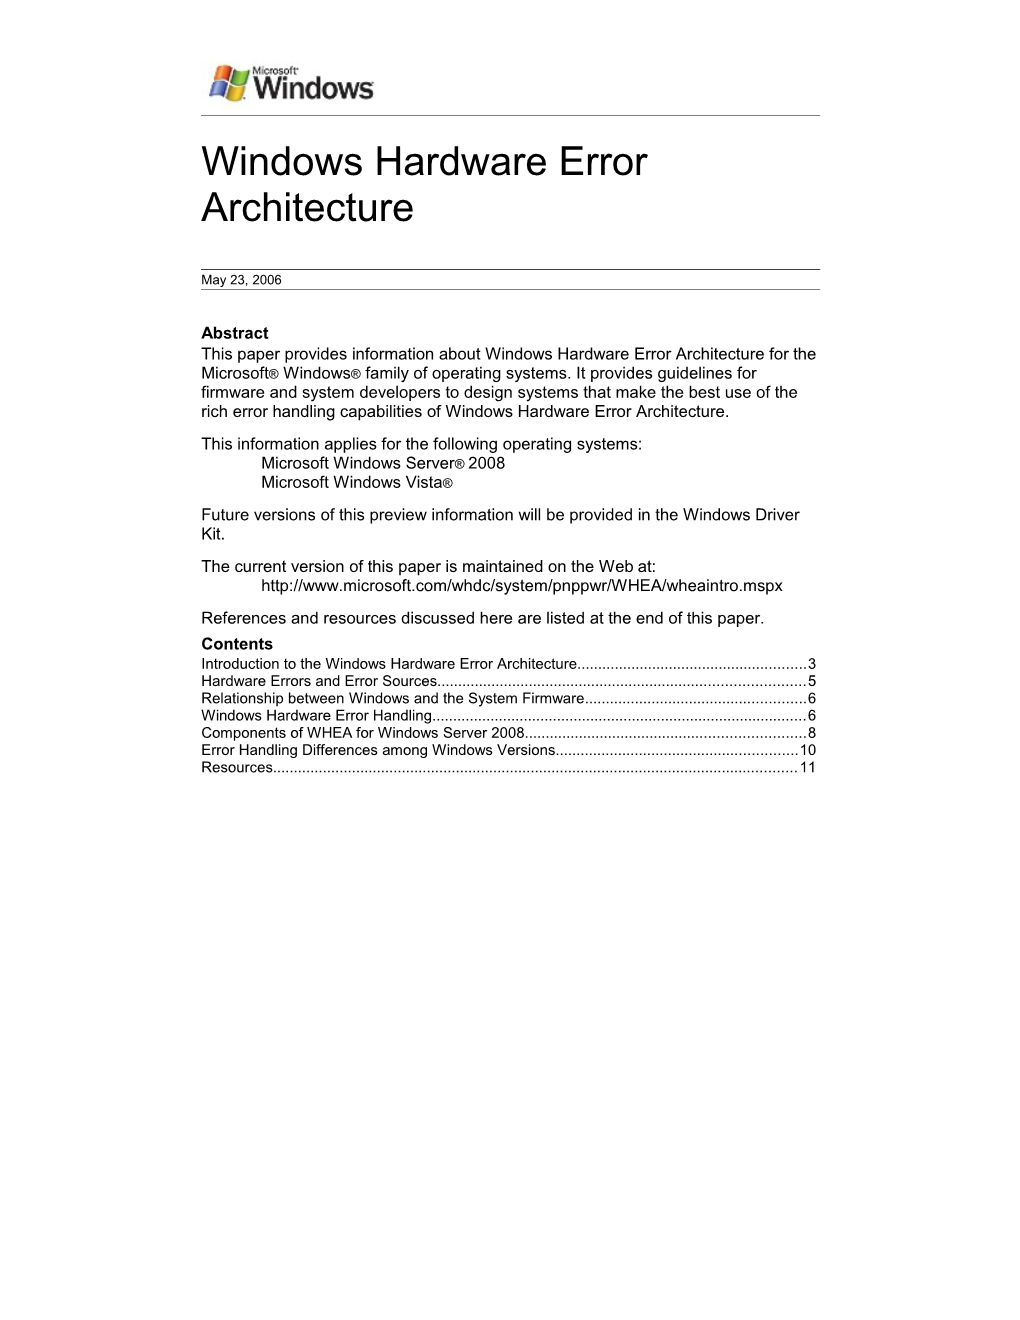 Windows Hardware Error Architecture